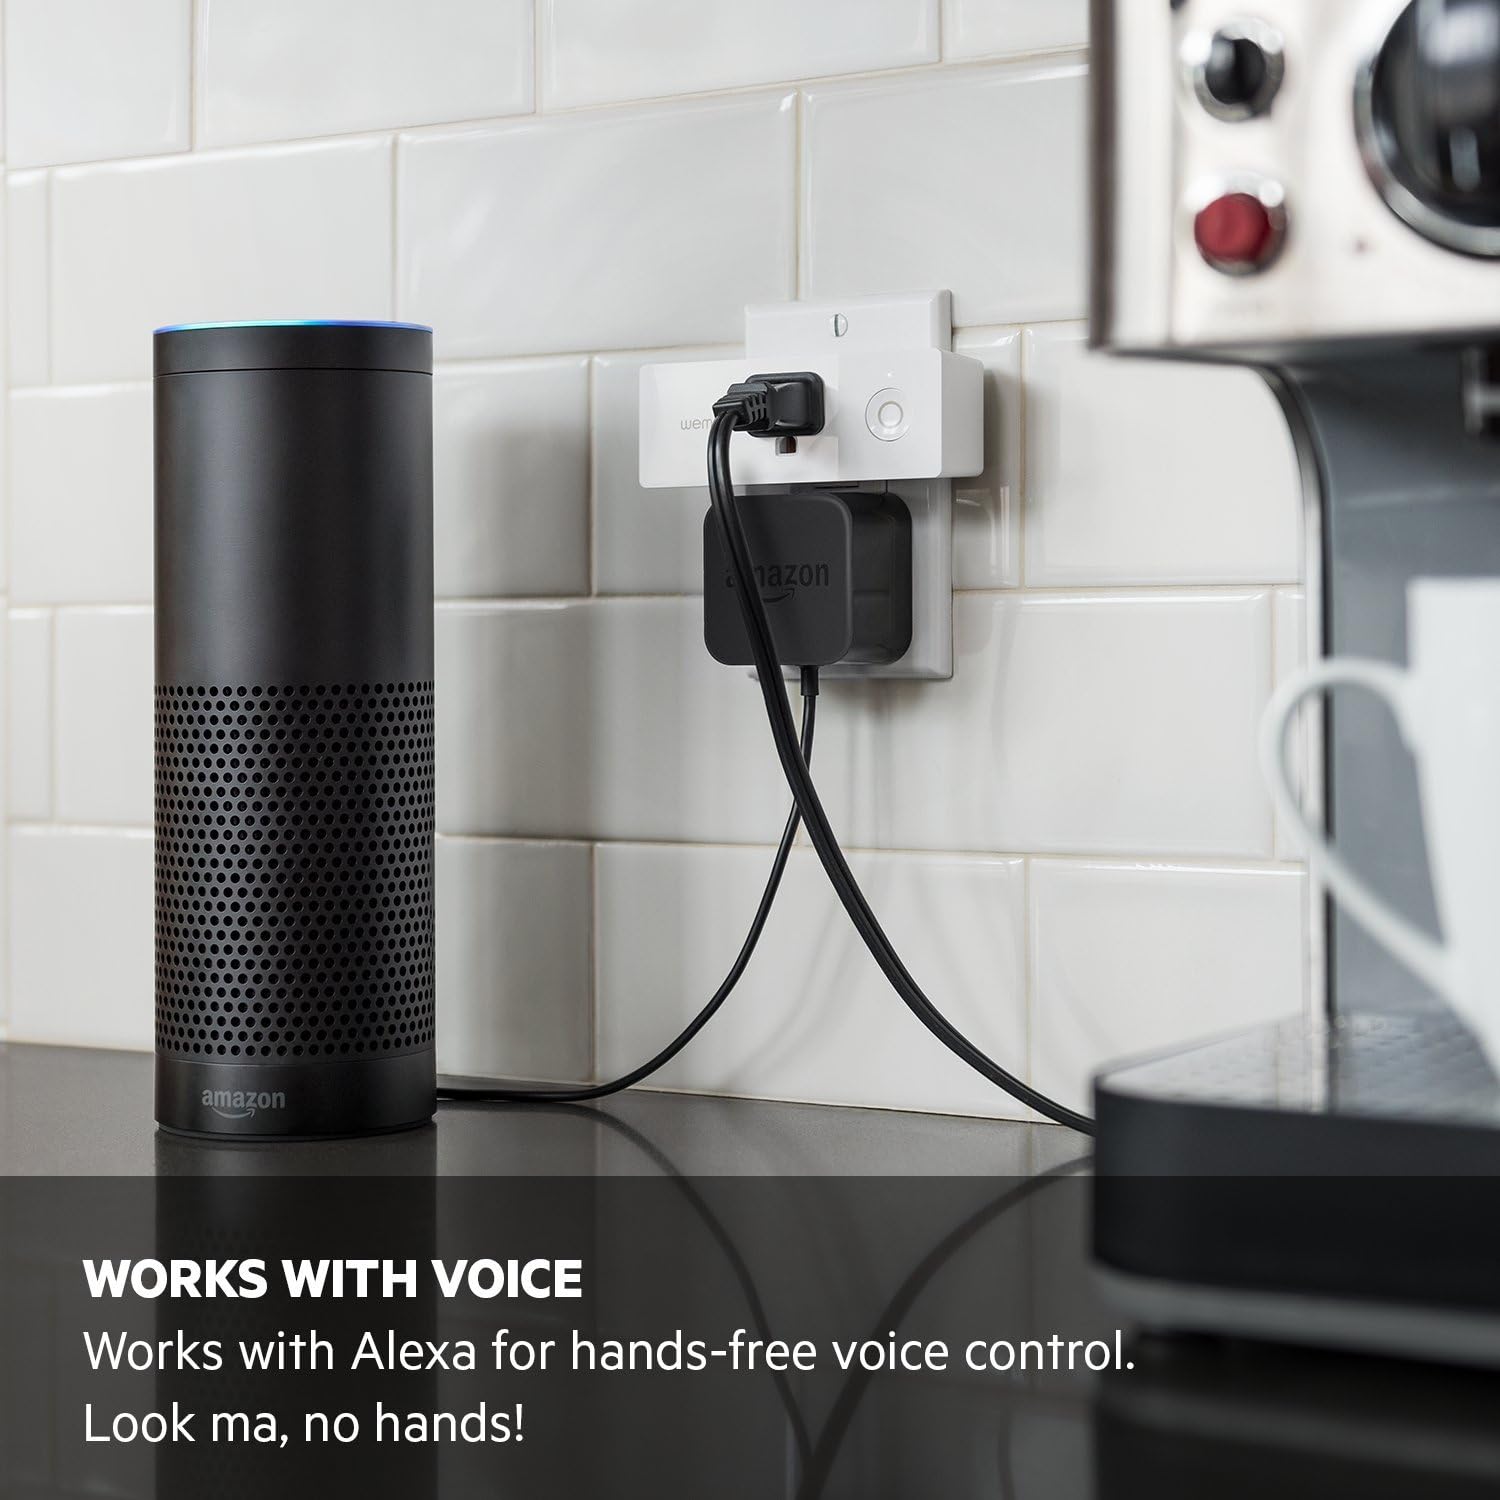 Wemo Mini Smart Plug, WiFi Enabled, Works with Alexa, Google Assistant & Apple HomeKit